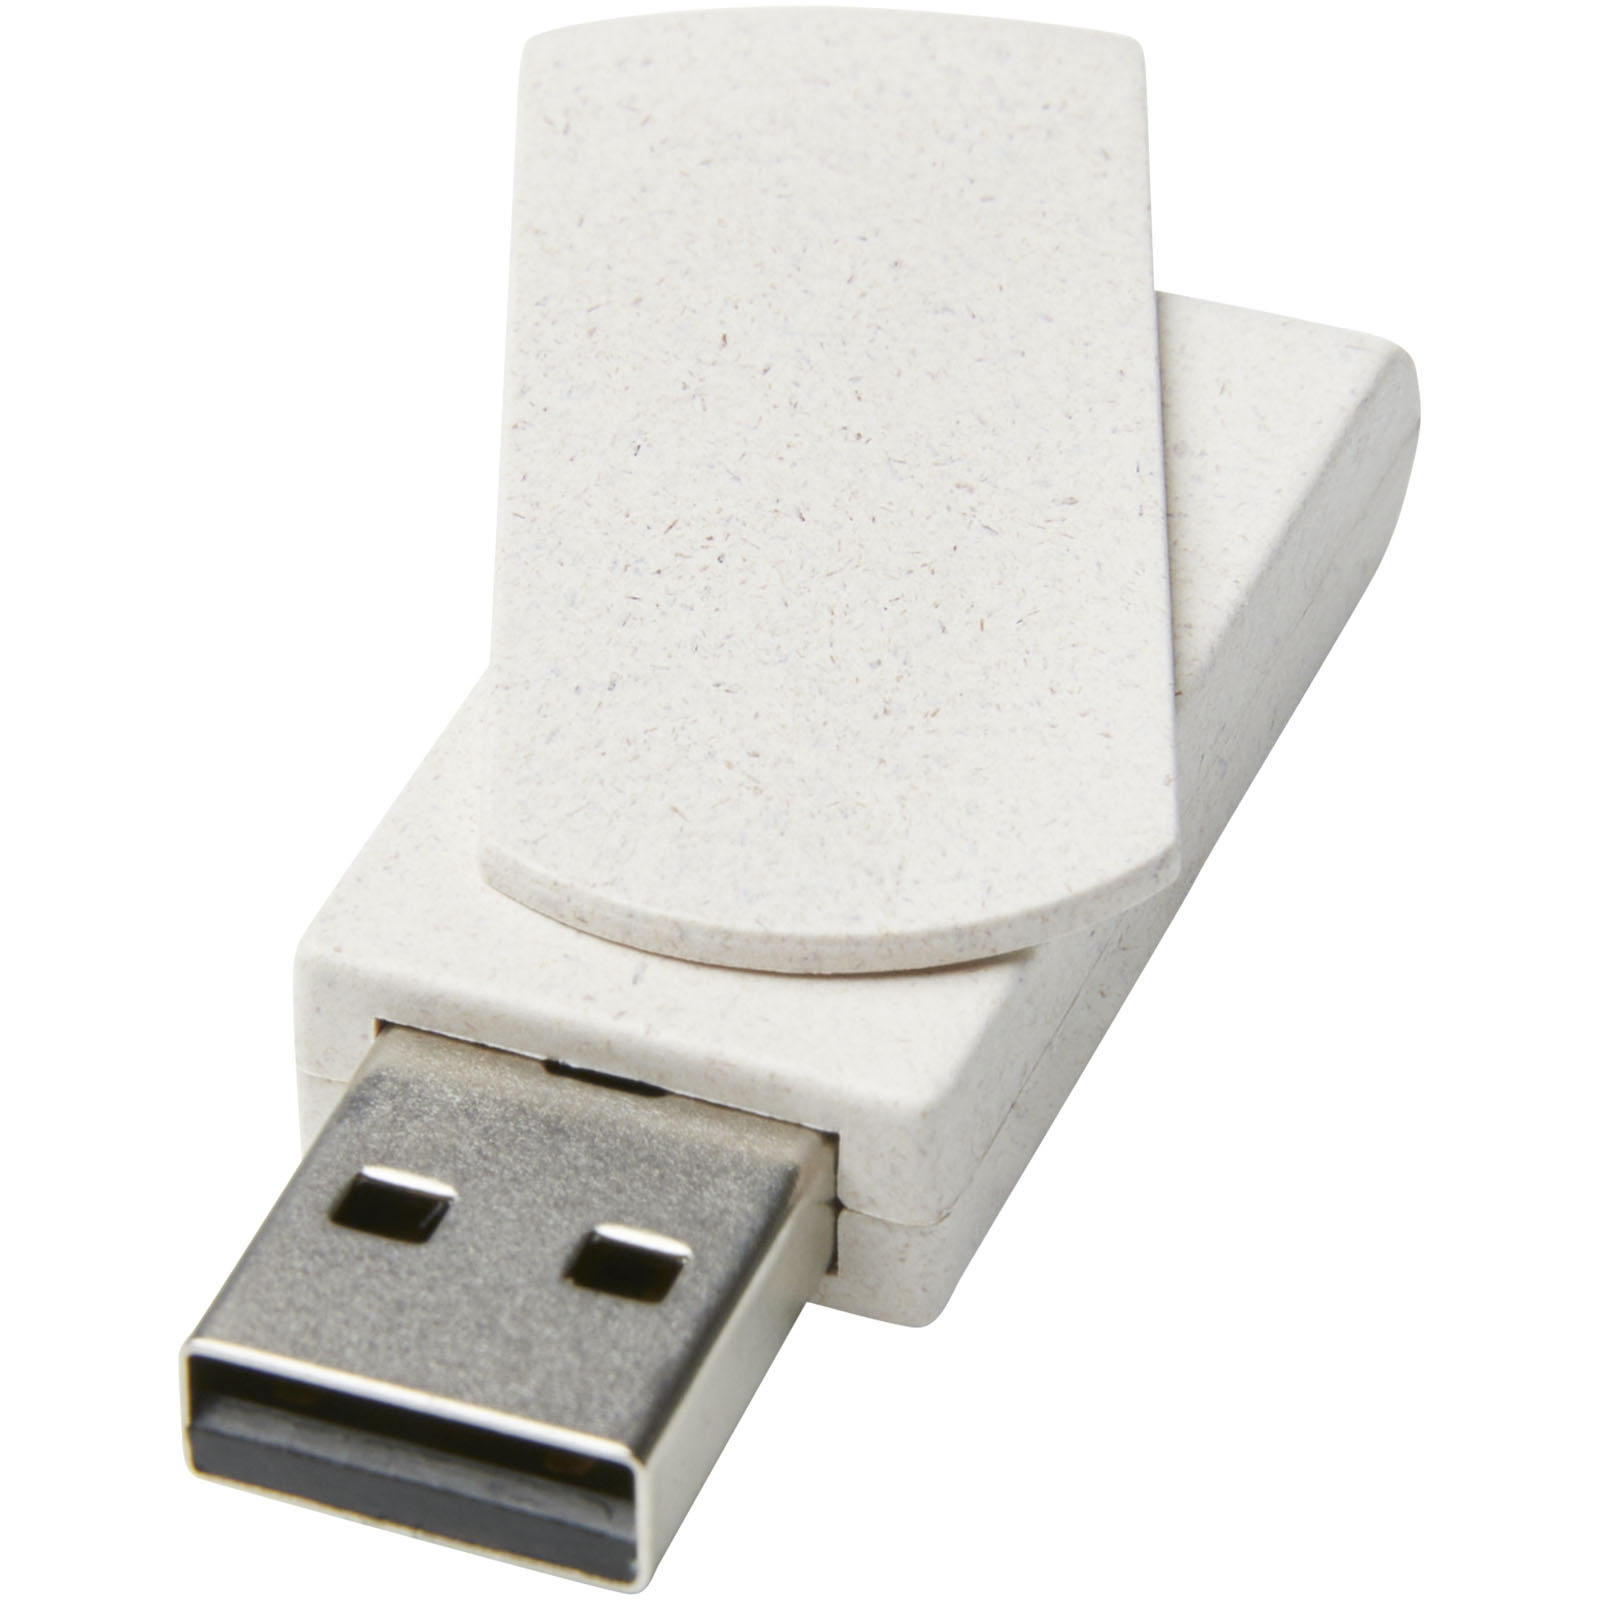 Advertising USB Flash Drives - Rotate 4GB wheat straw USB flash drive